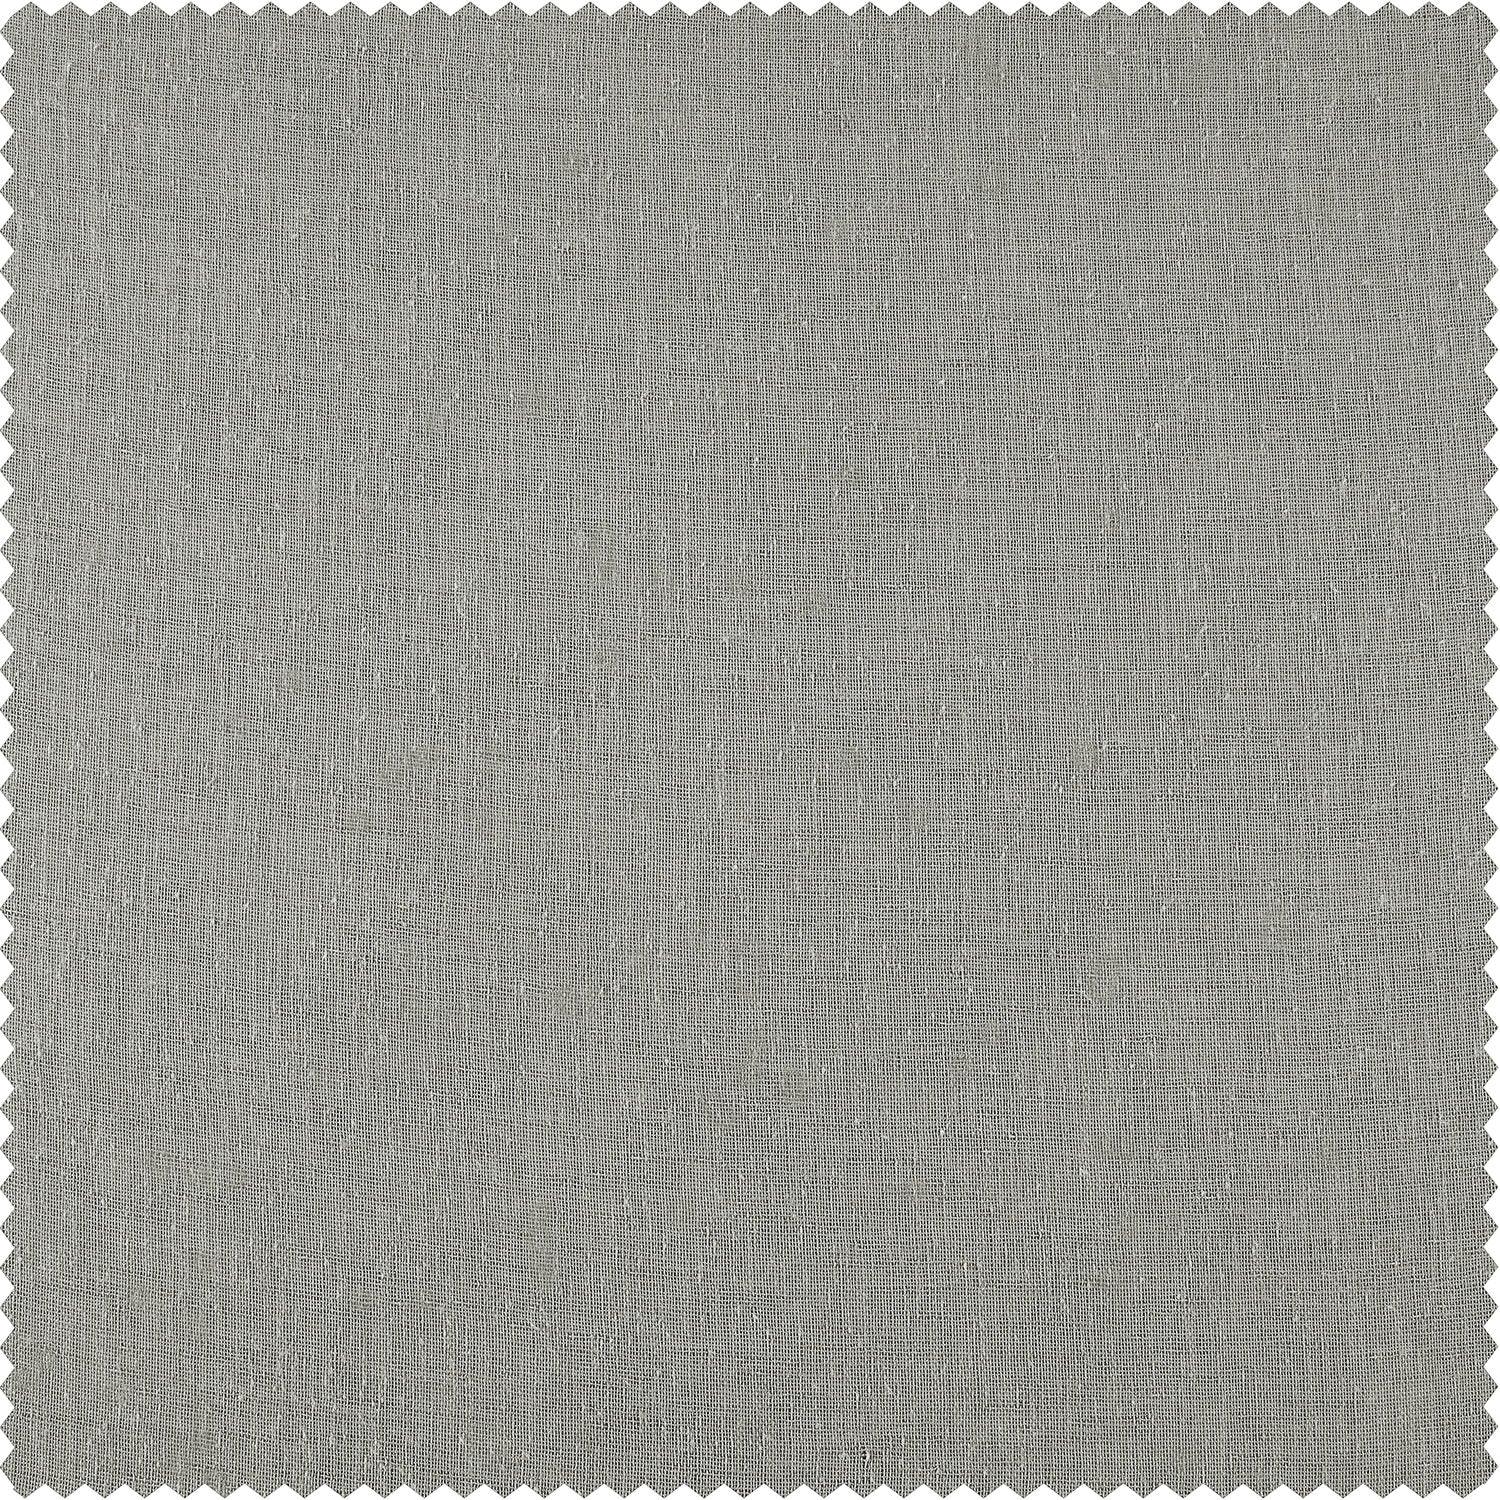 Alto Grey Linen Sheer Curtain Pair (2 Panels)